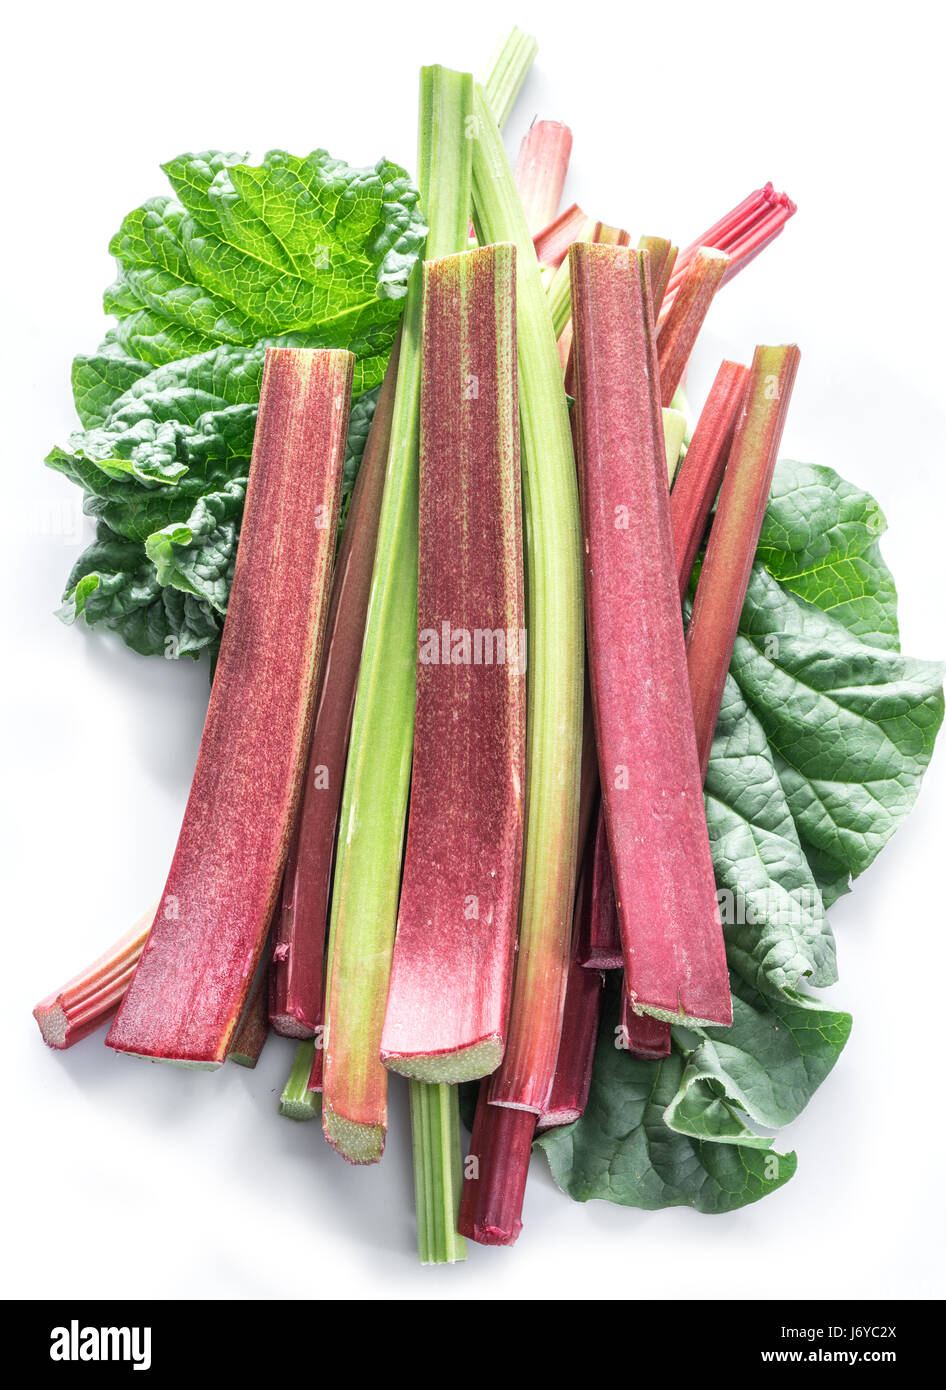 Edible rhubarb stalks on the white background. Stock Photo